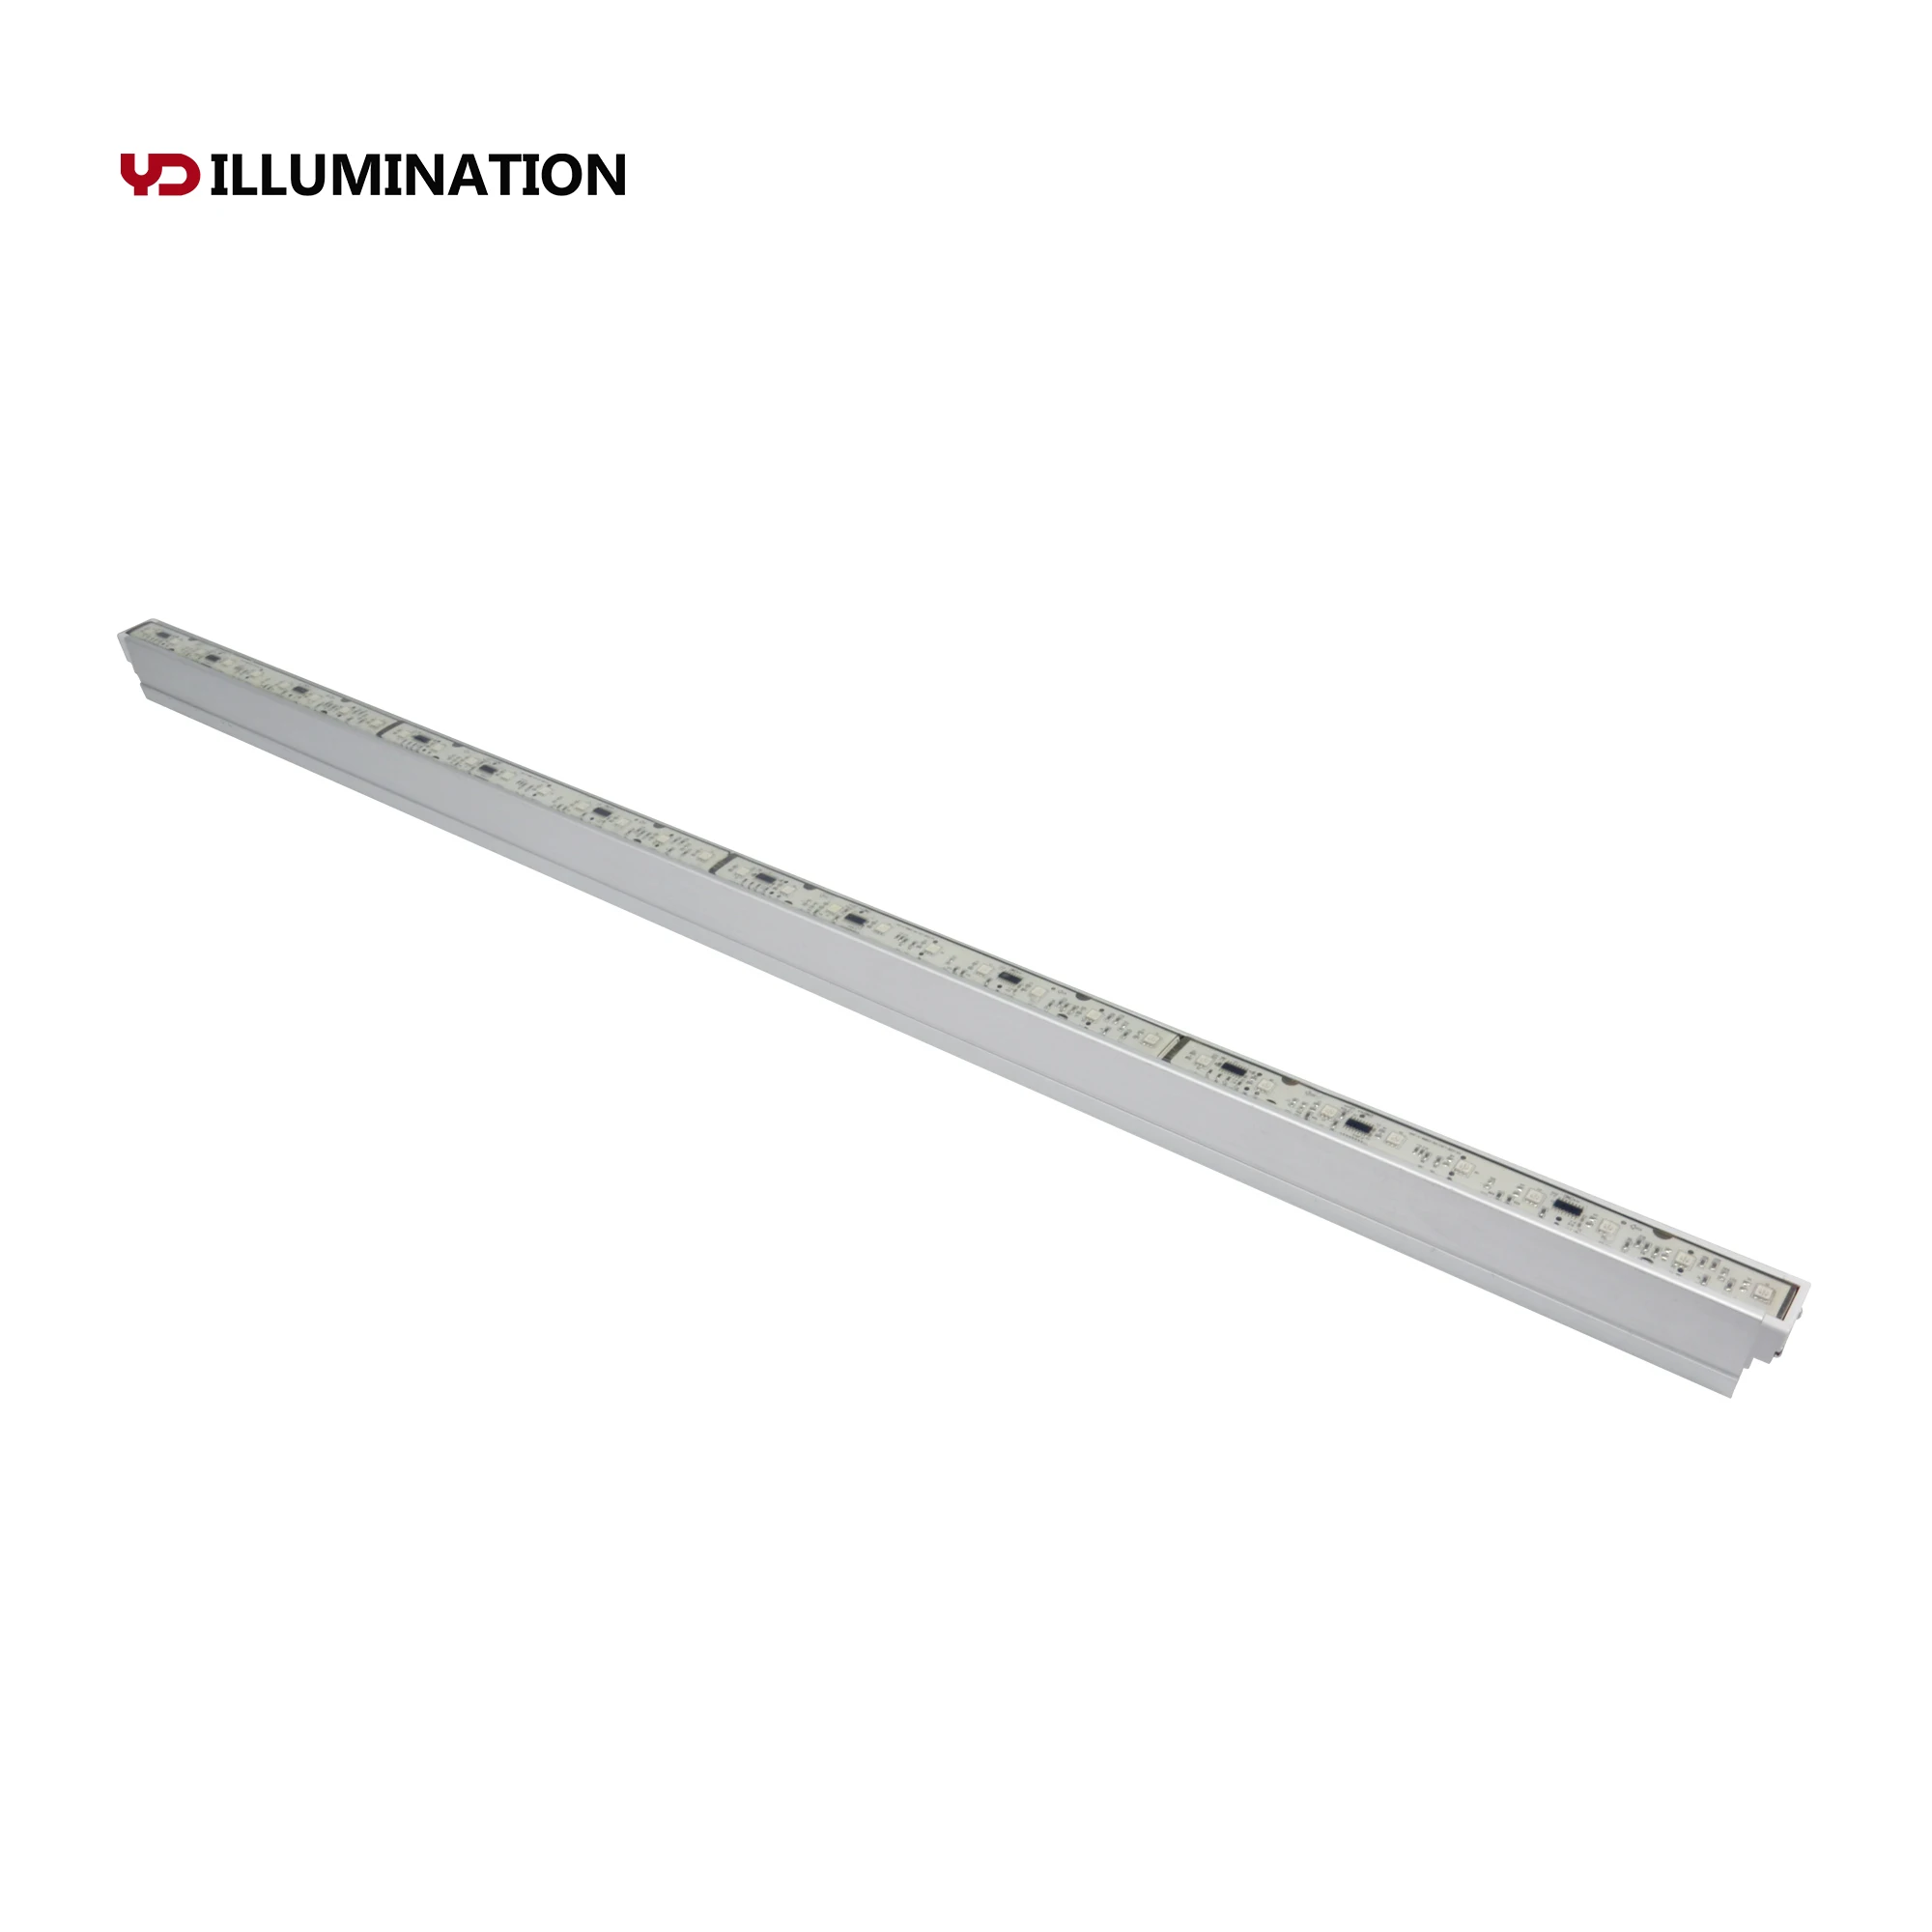 dmx pixel linear light bar rgb programmable control aluminum pofile tube light linear light